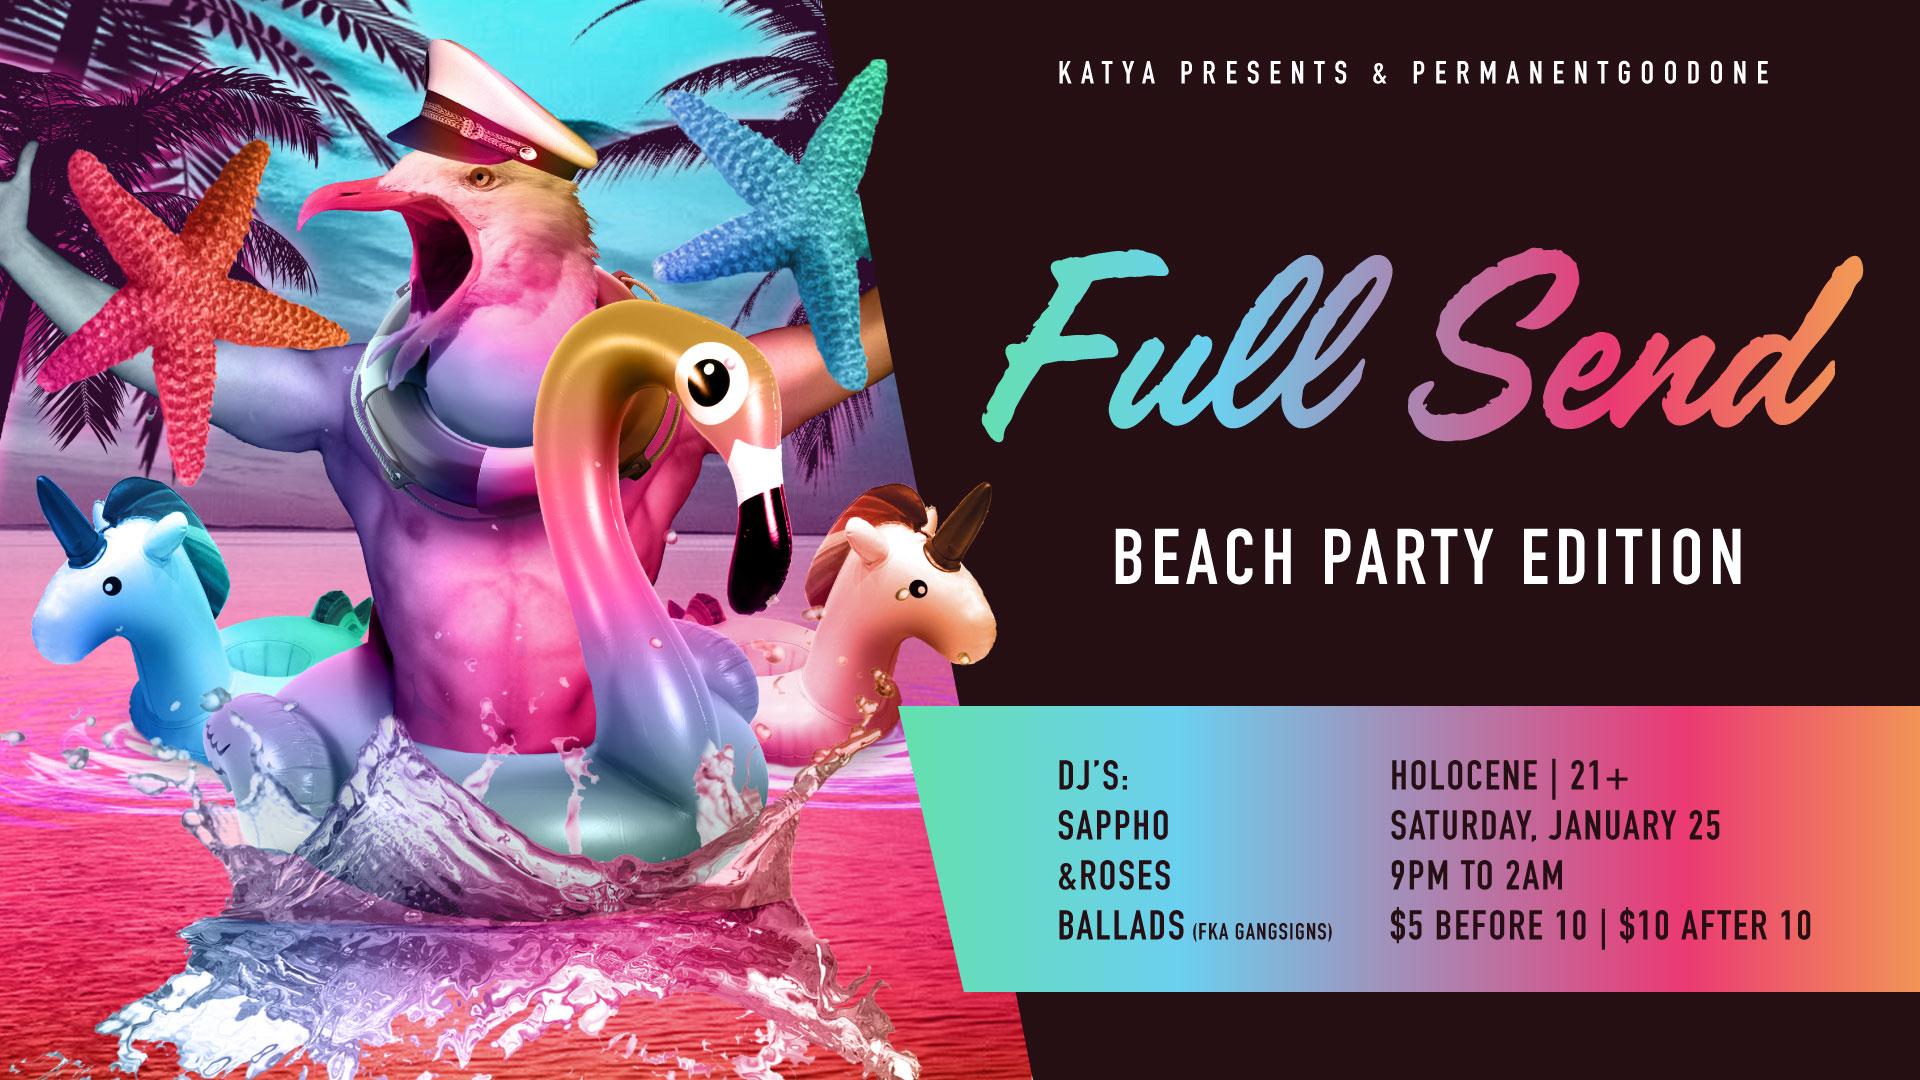 Full Send: Beach Party